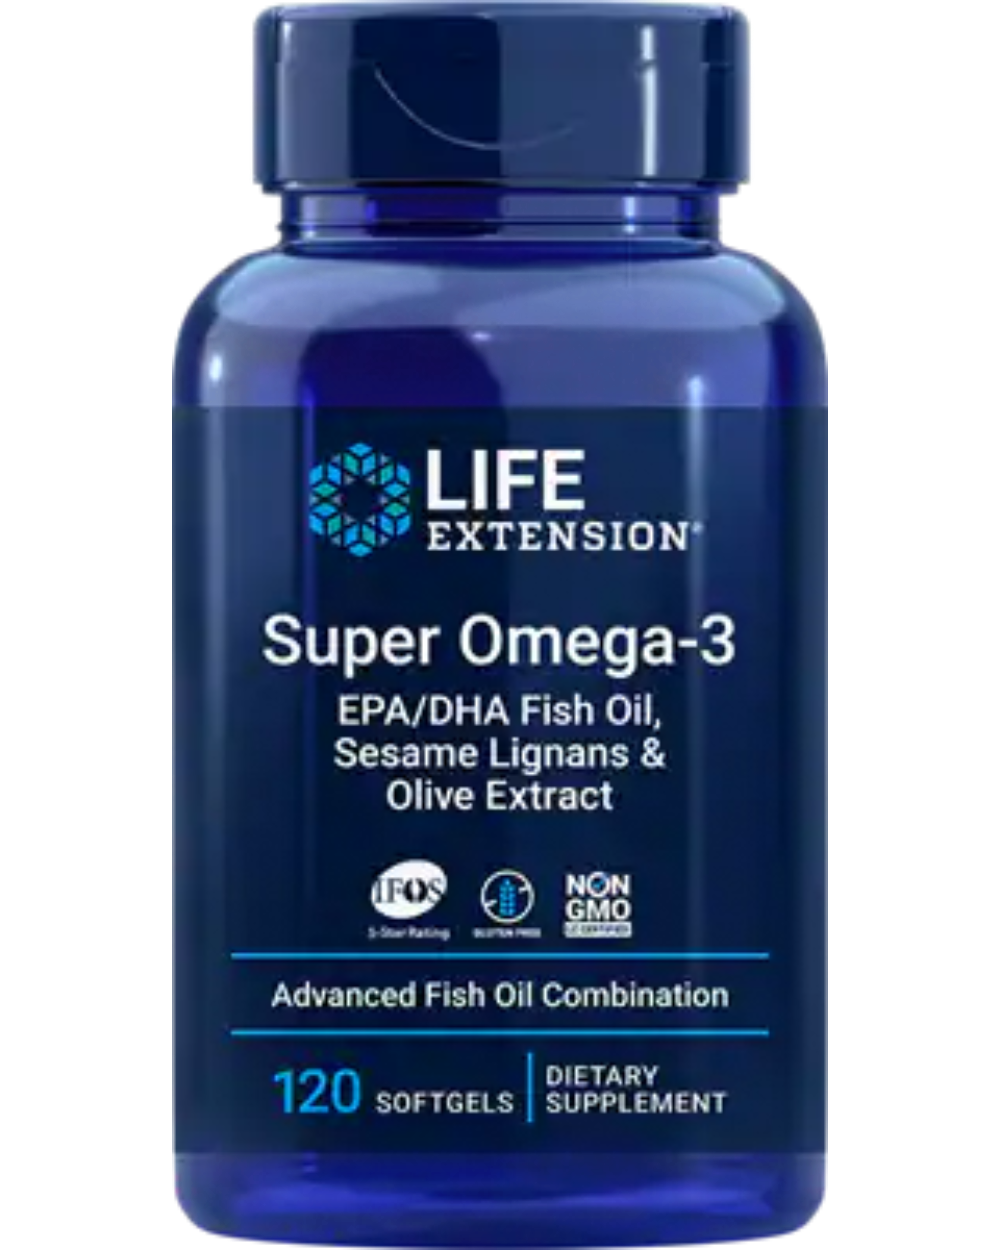 Super Omega 3 Life Extension